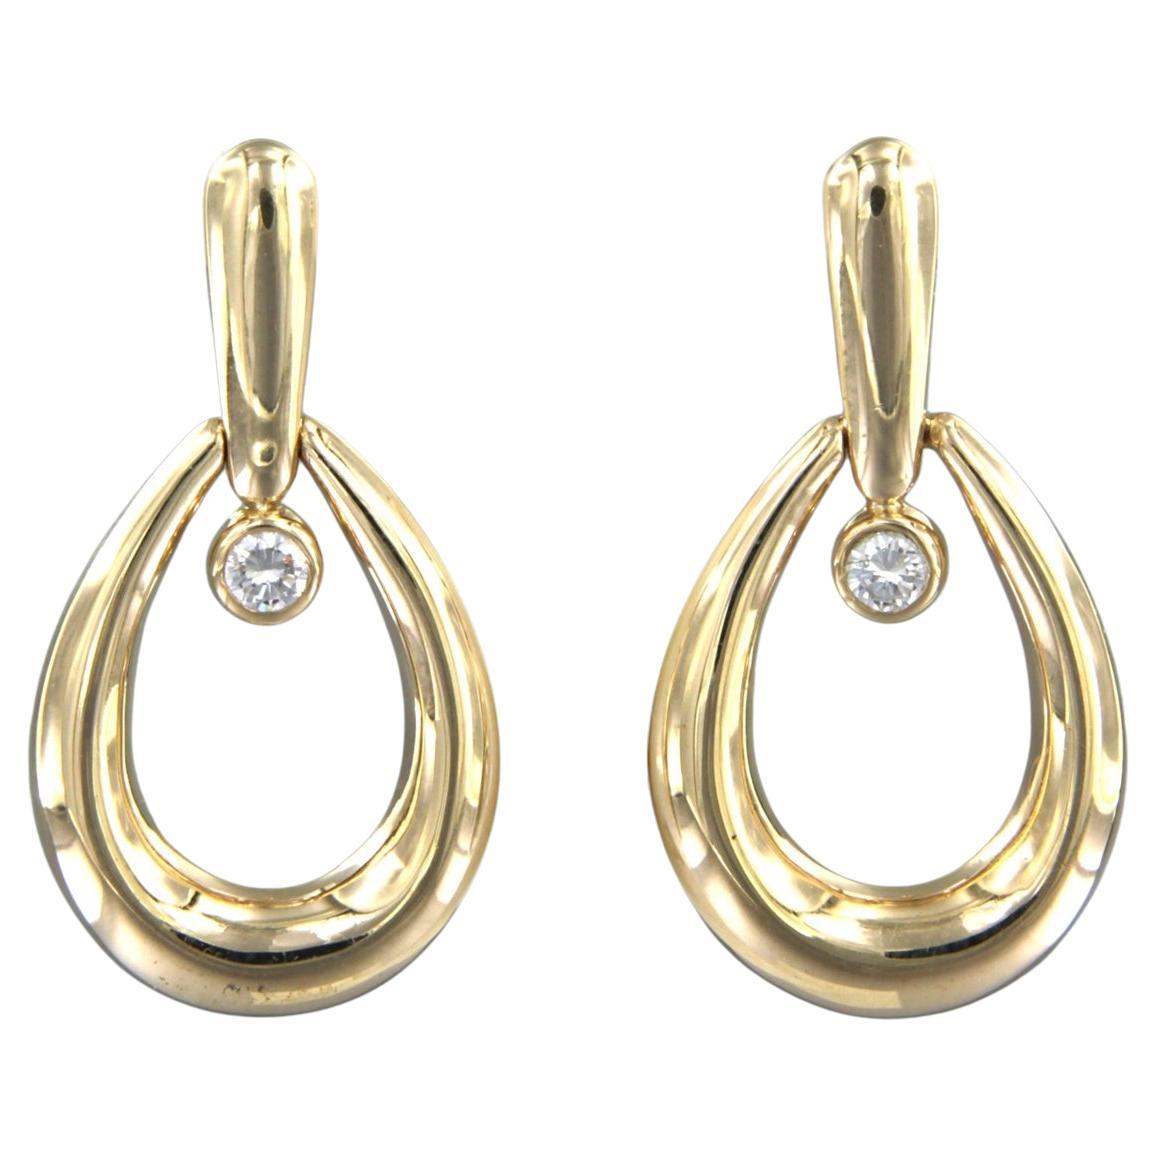 Earrings set with brilliant cut diamonds 14k yellow gold